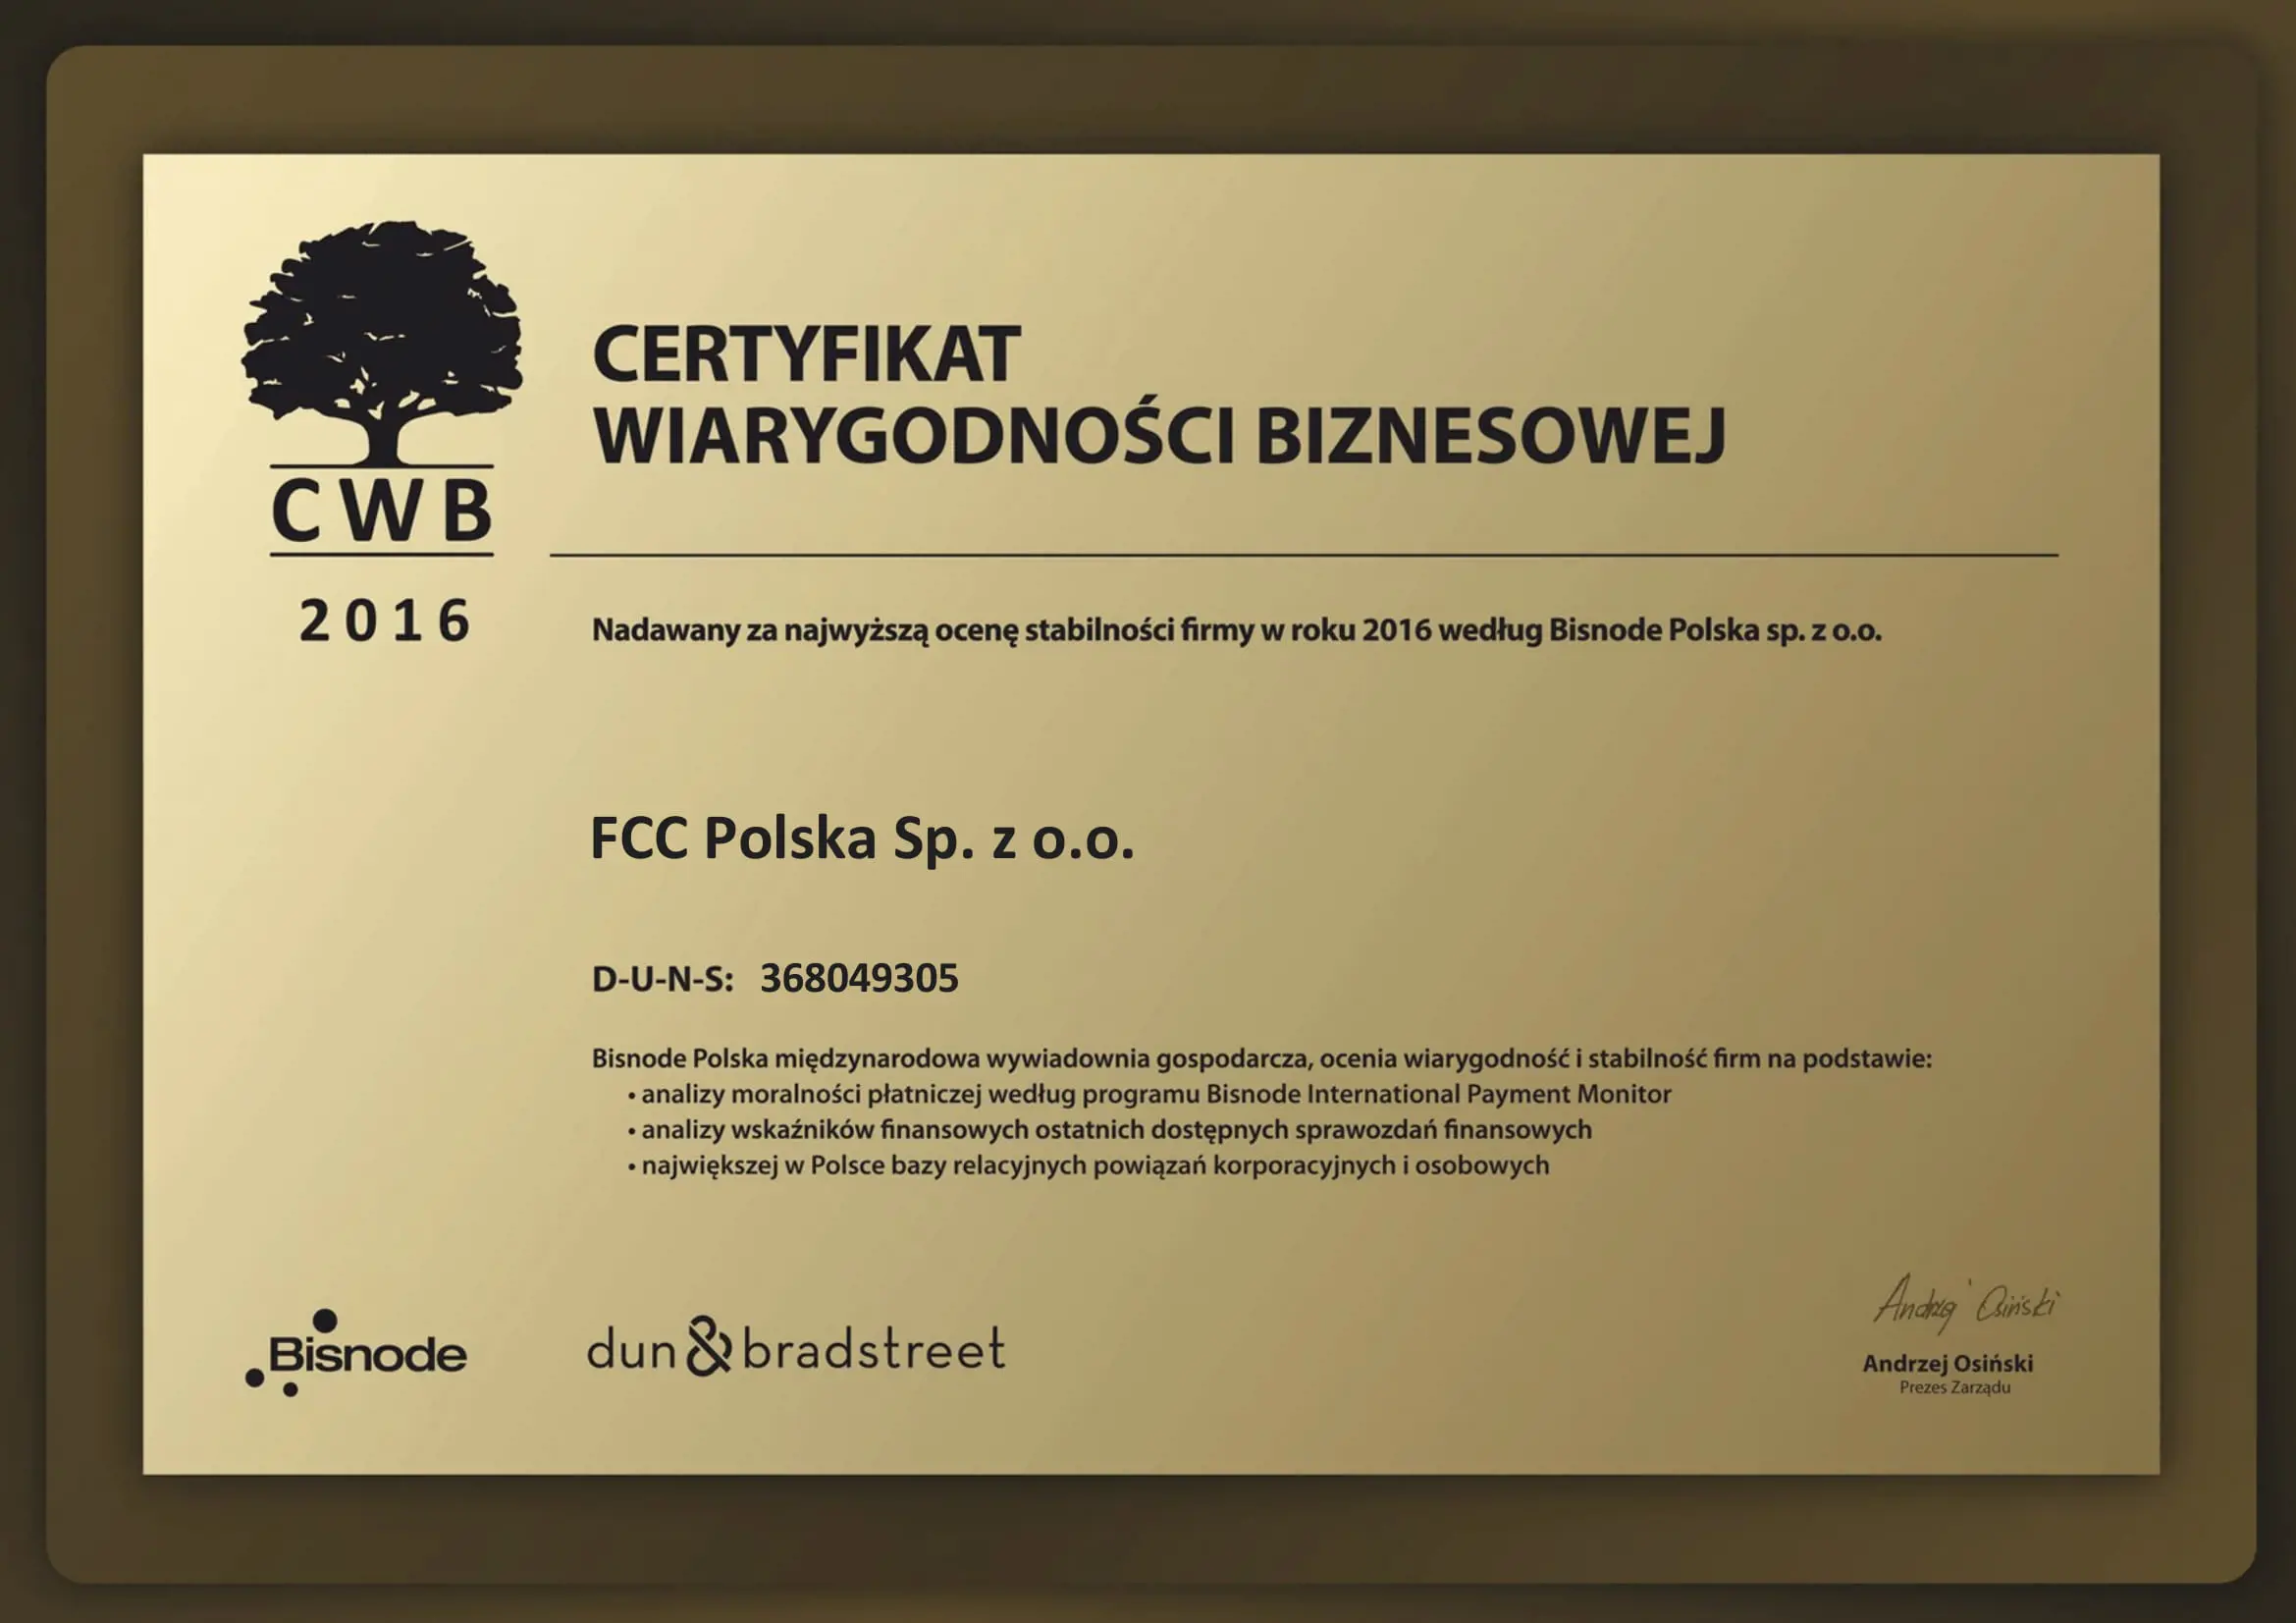 Certificate of Business Credibility for FCC Polska 